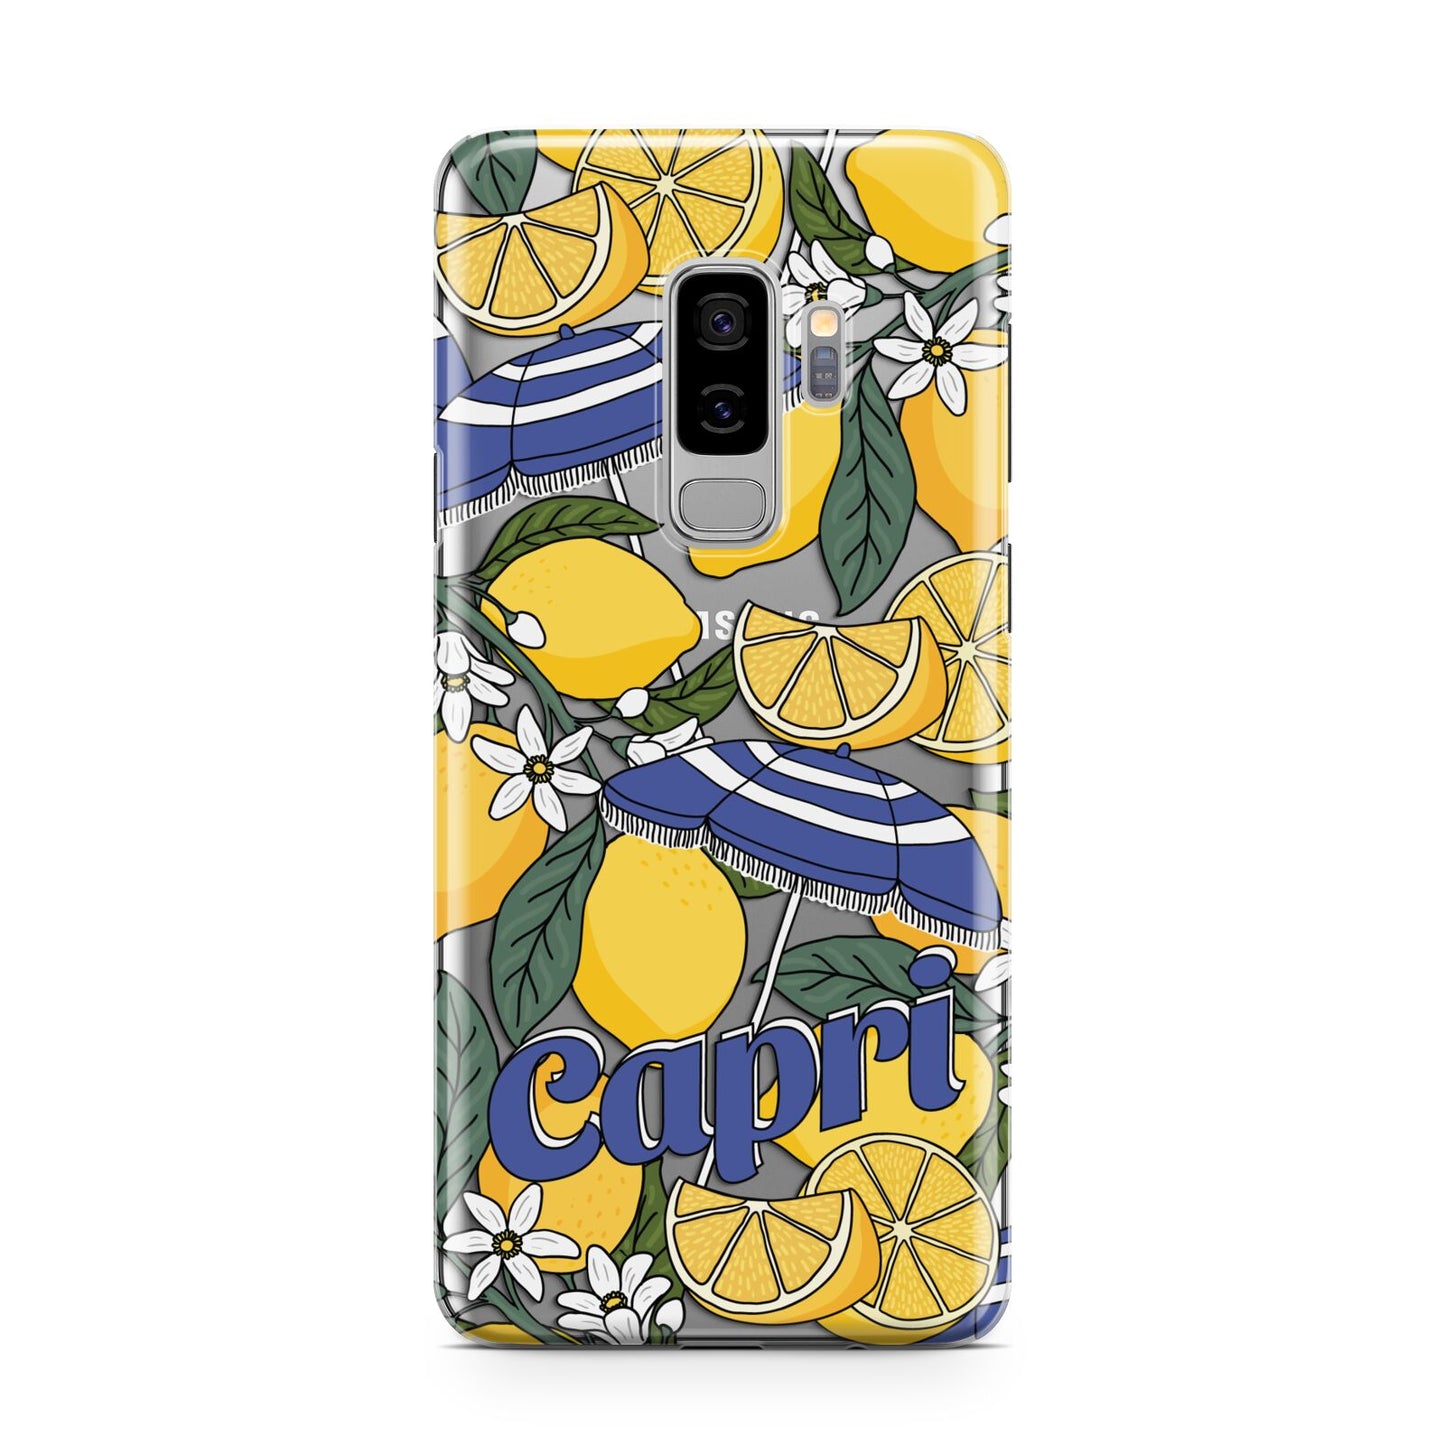 Capri Samsung Galaxy S9 Plus Case on Silver phone